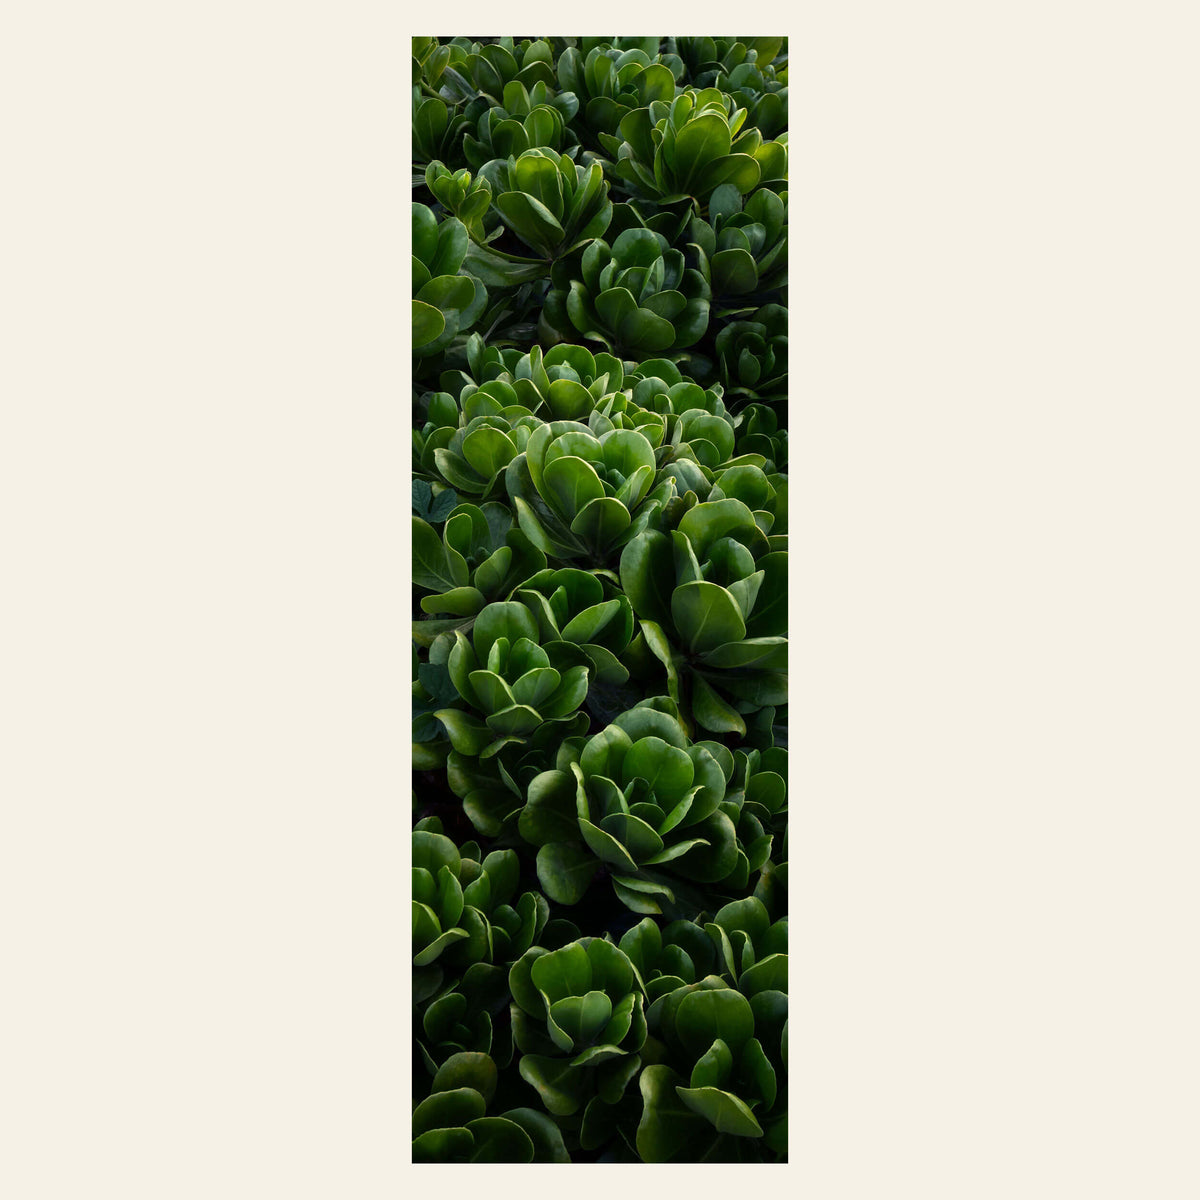 A Kauai plants picture.